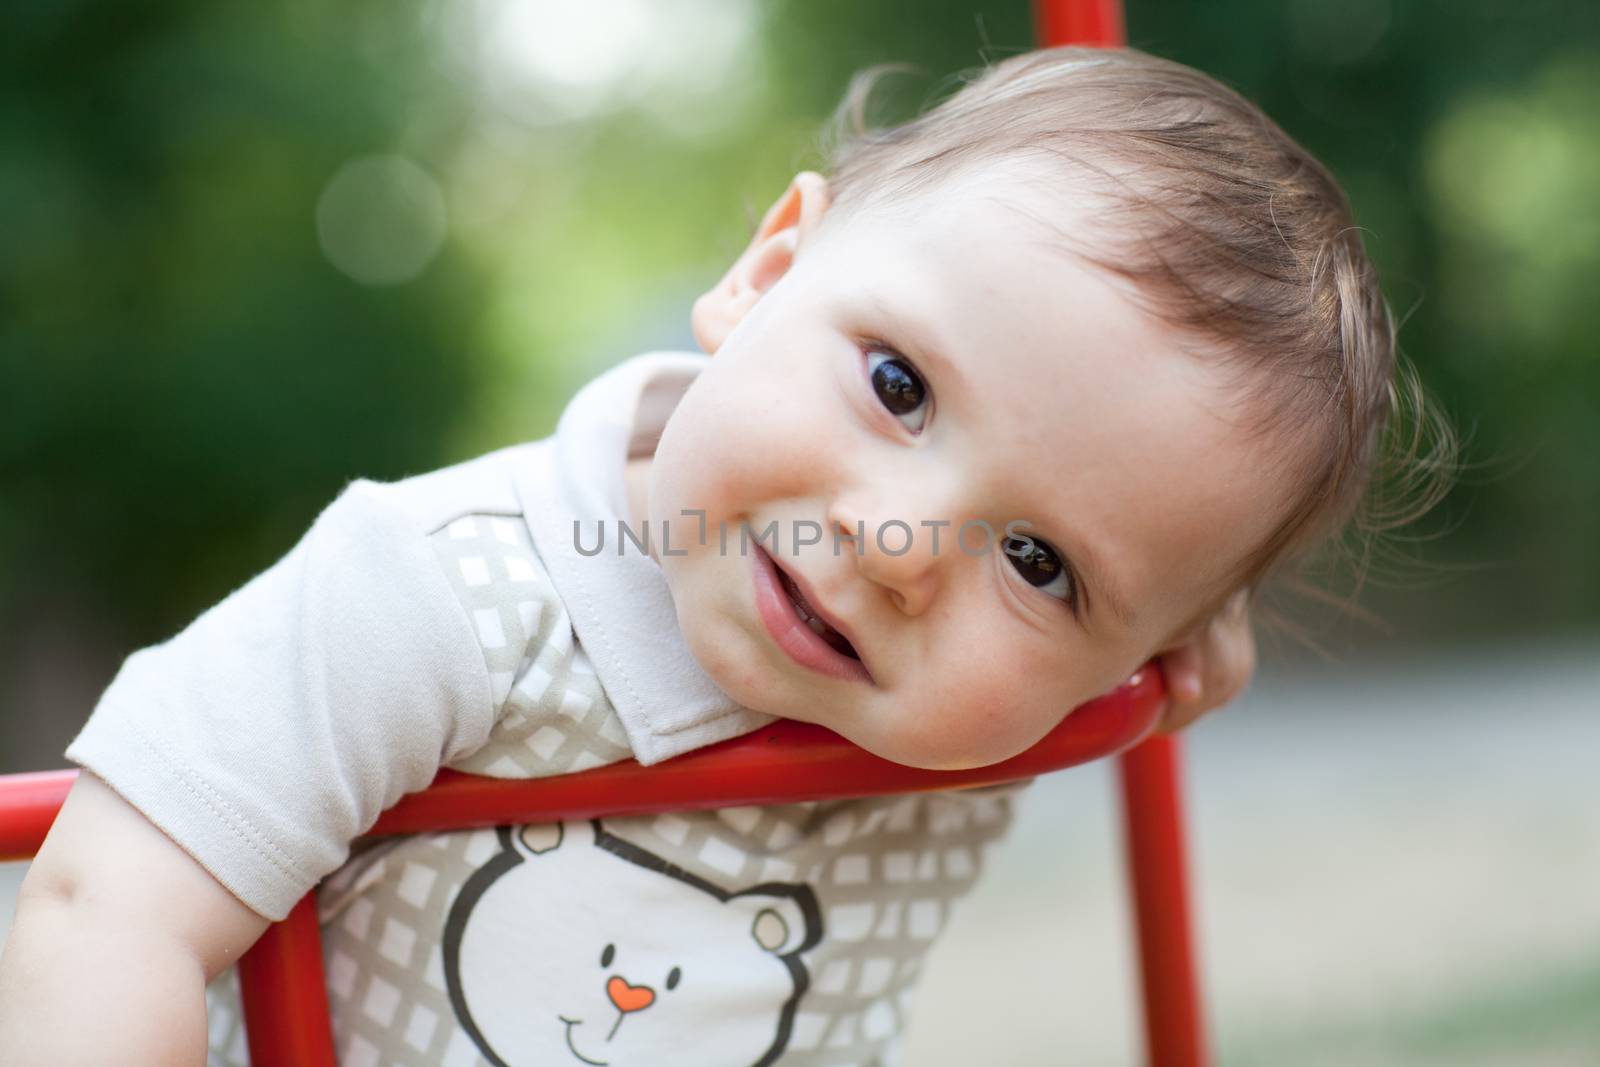 child on the swing by vsurkov